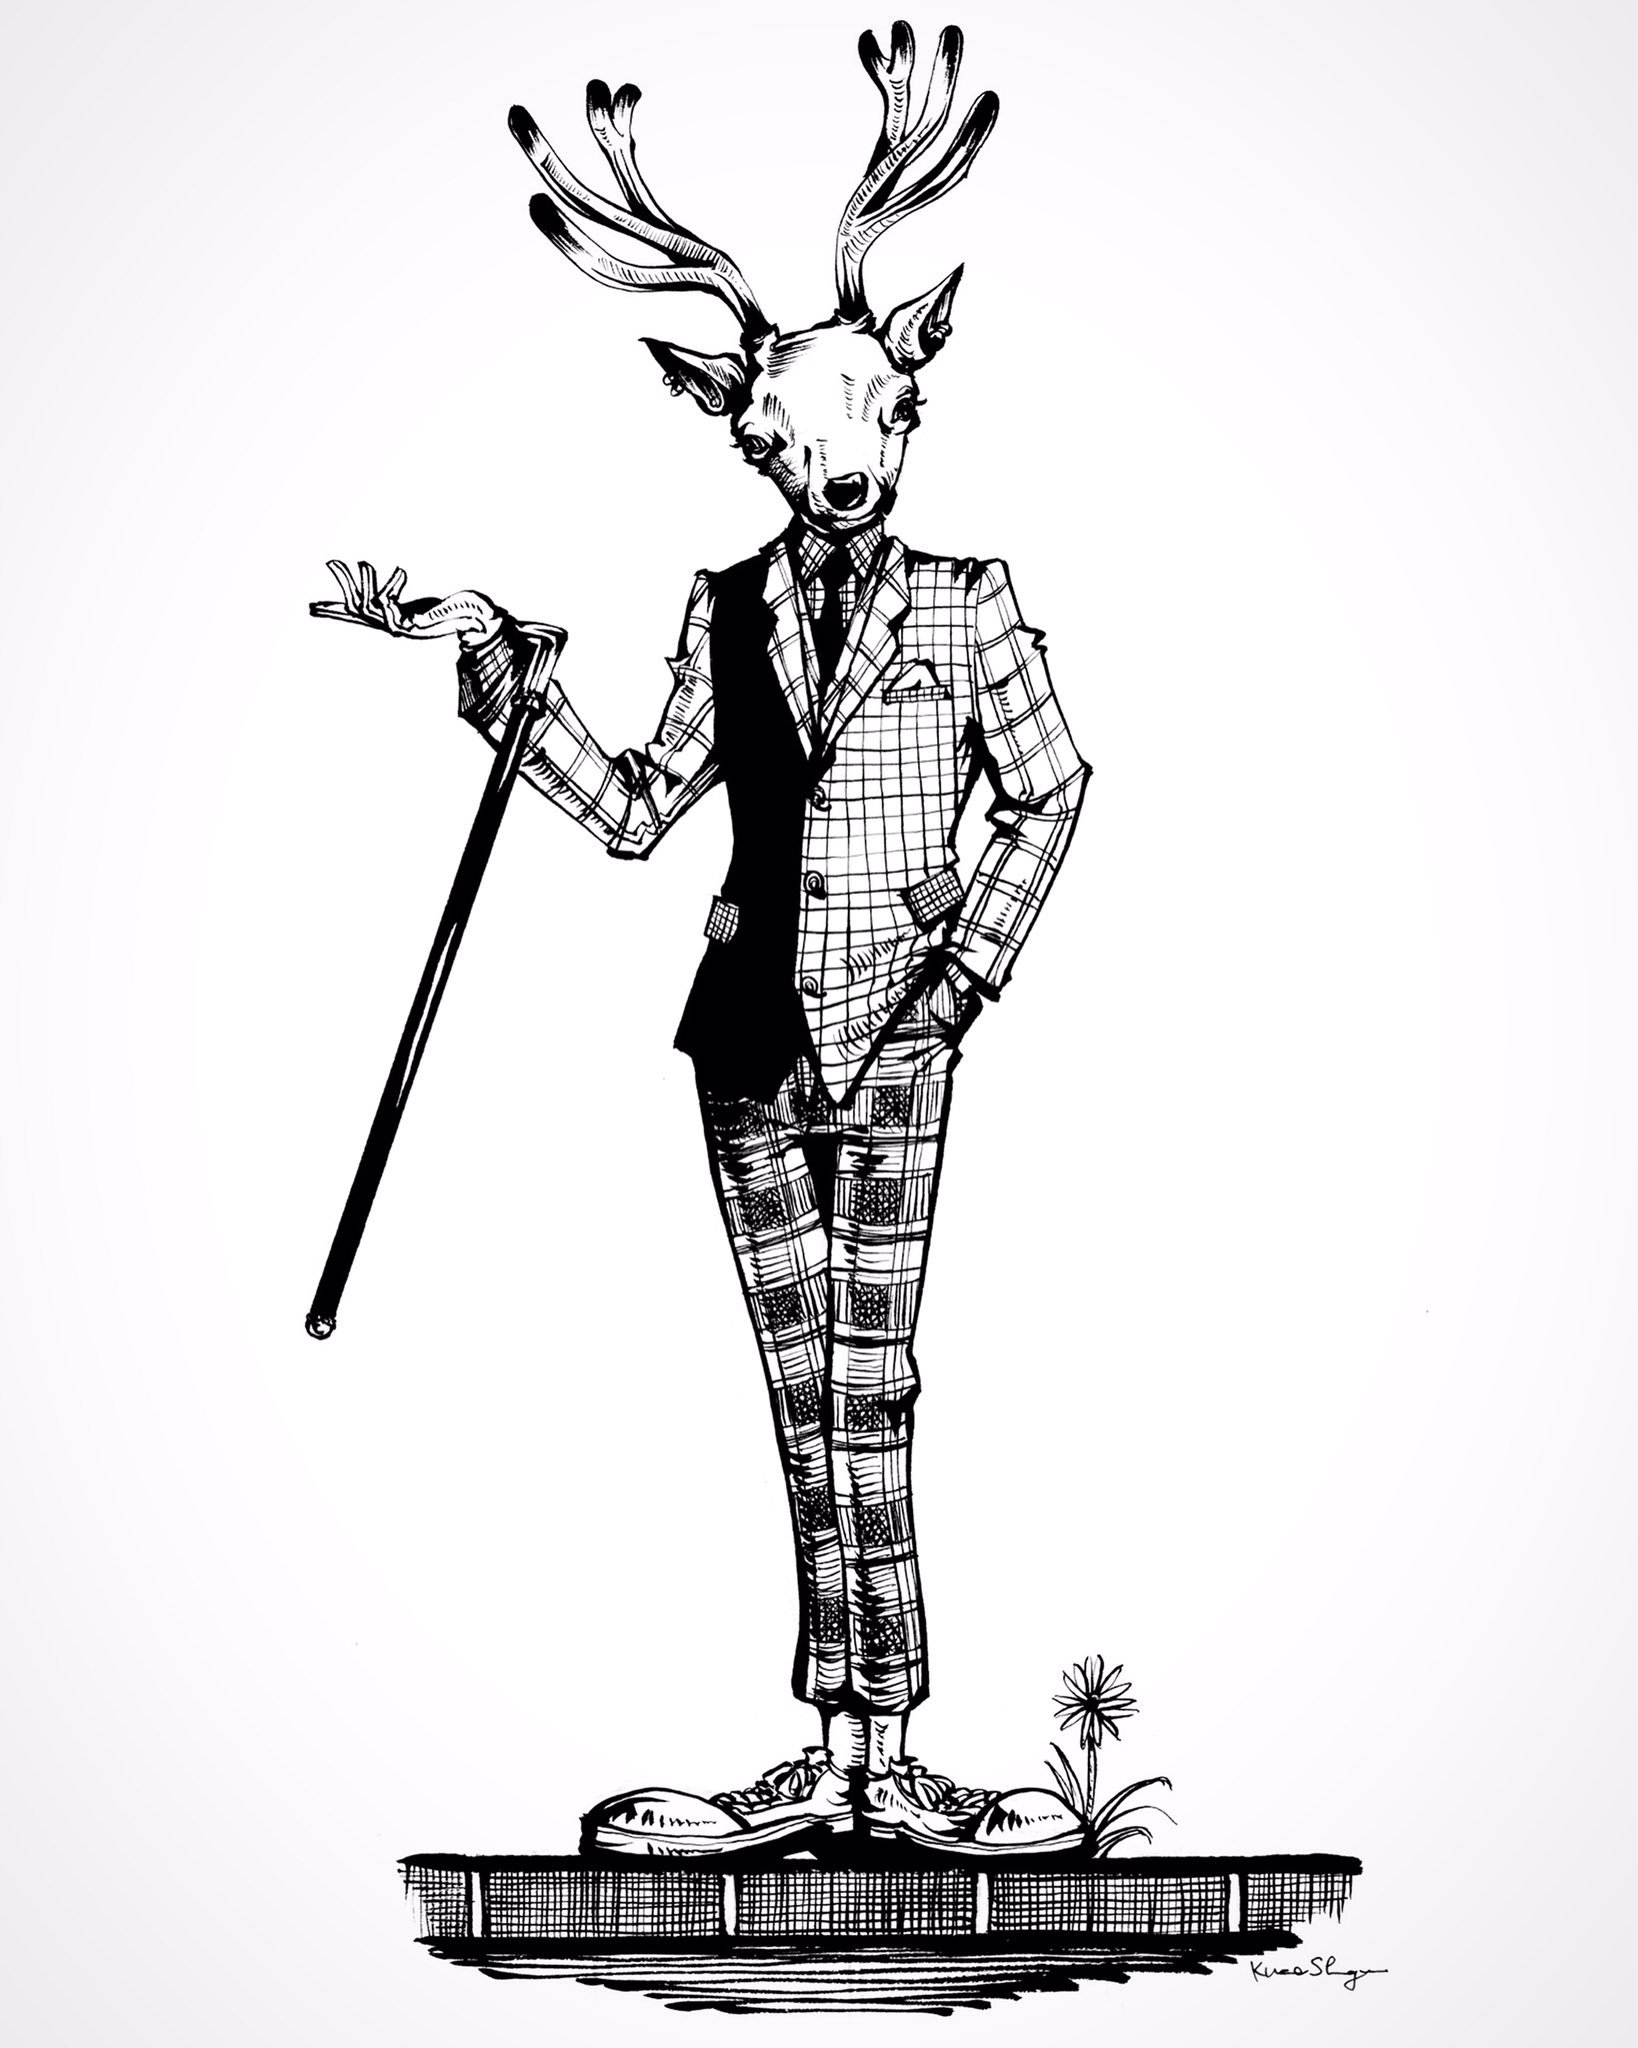 توییتر クロセシンゴ در توییتر 過去作品 鹿男 絵 イラスト アナログ 線画 ペン モノクロ 白黒 鹿男 鹿 動物 擬人化 Illustration Art Artwork Draw Drawing Linedrawing Deer Deerman Animal T Co 42fdommfry